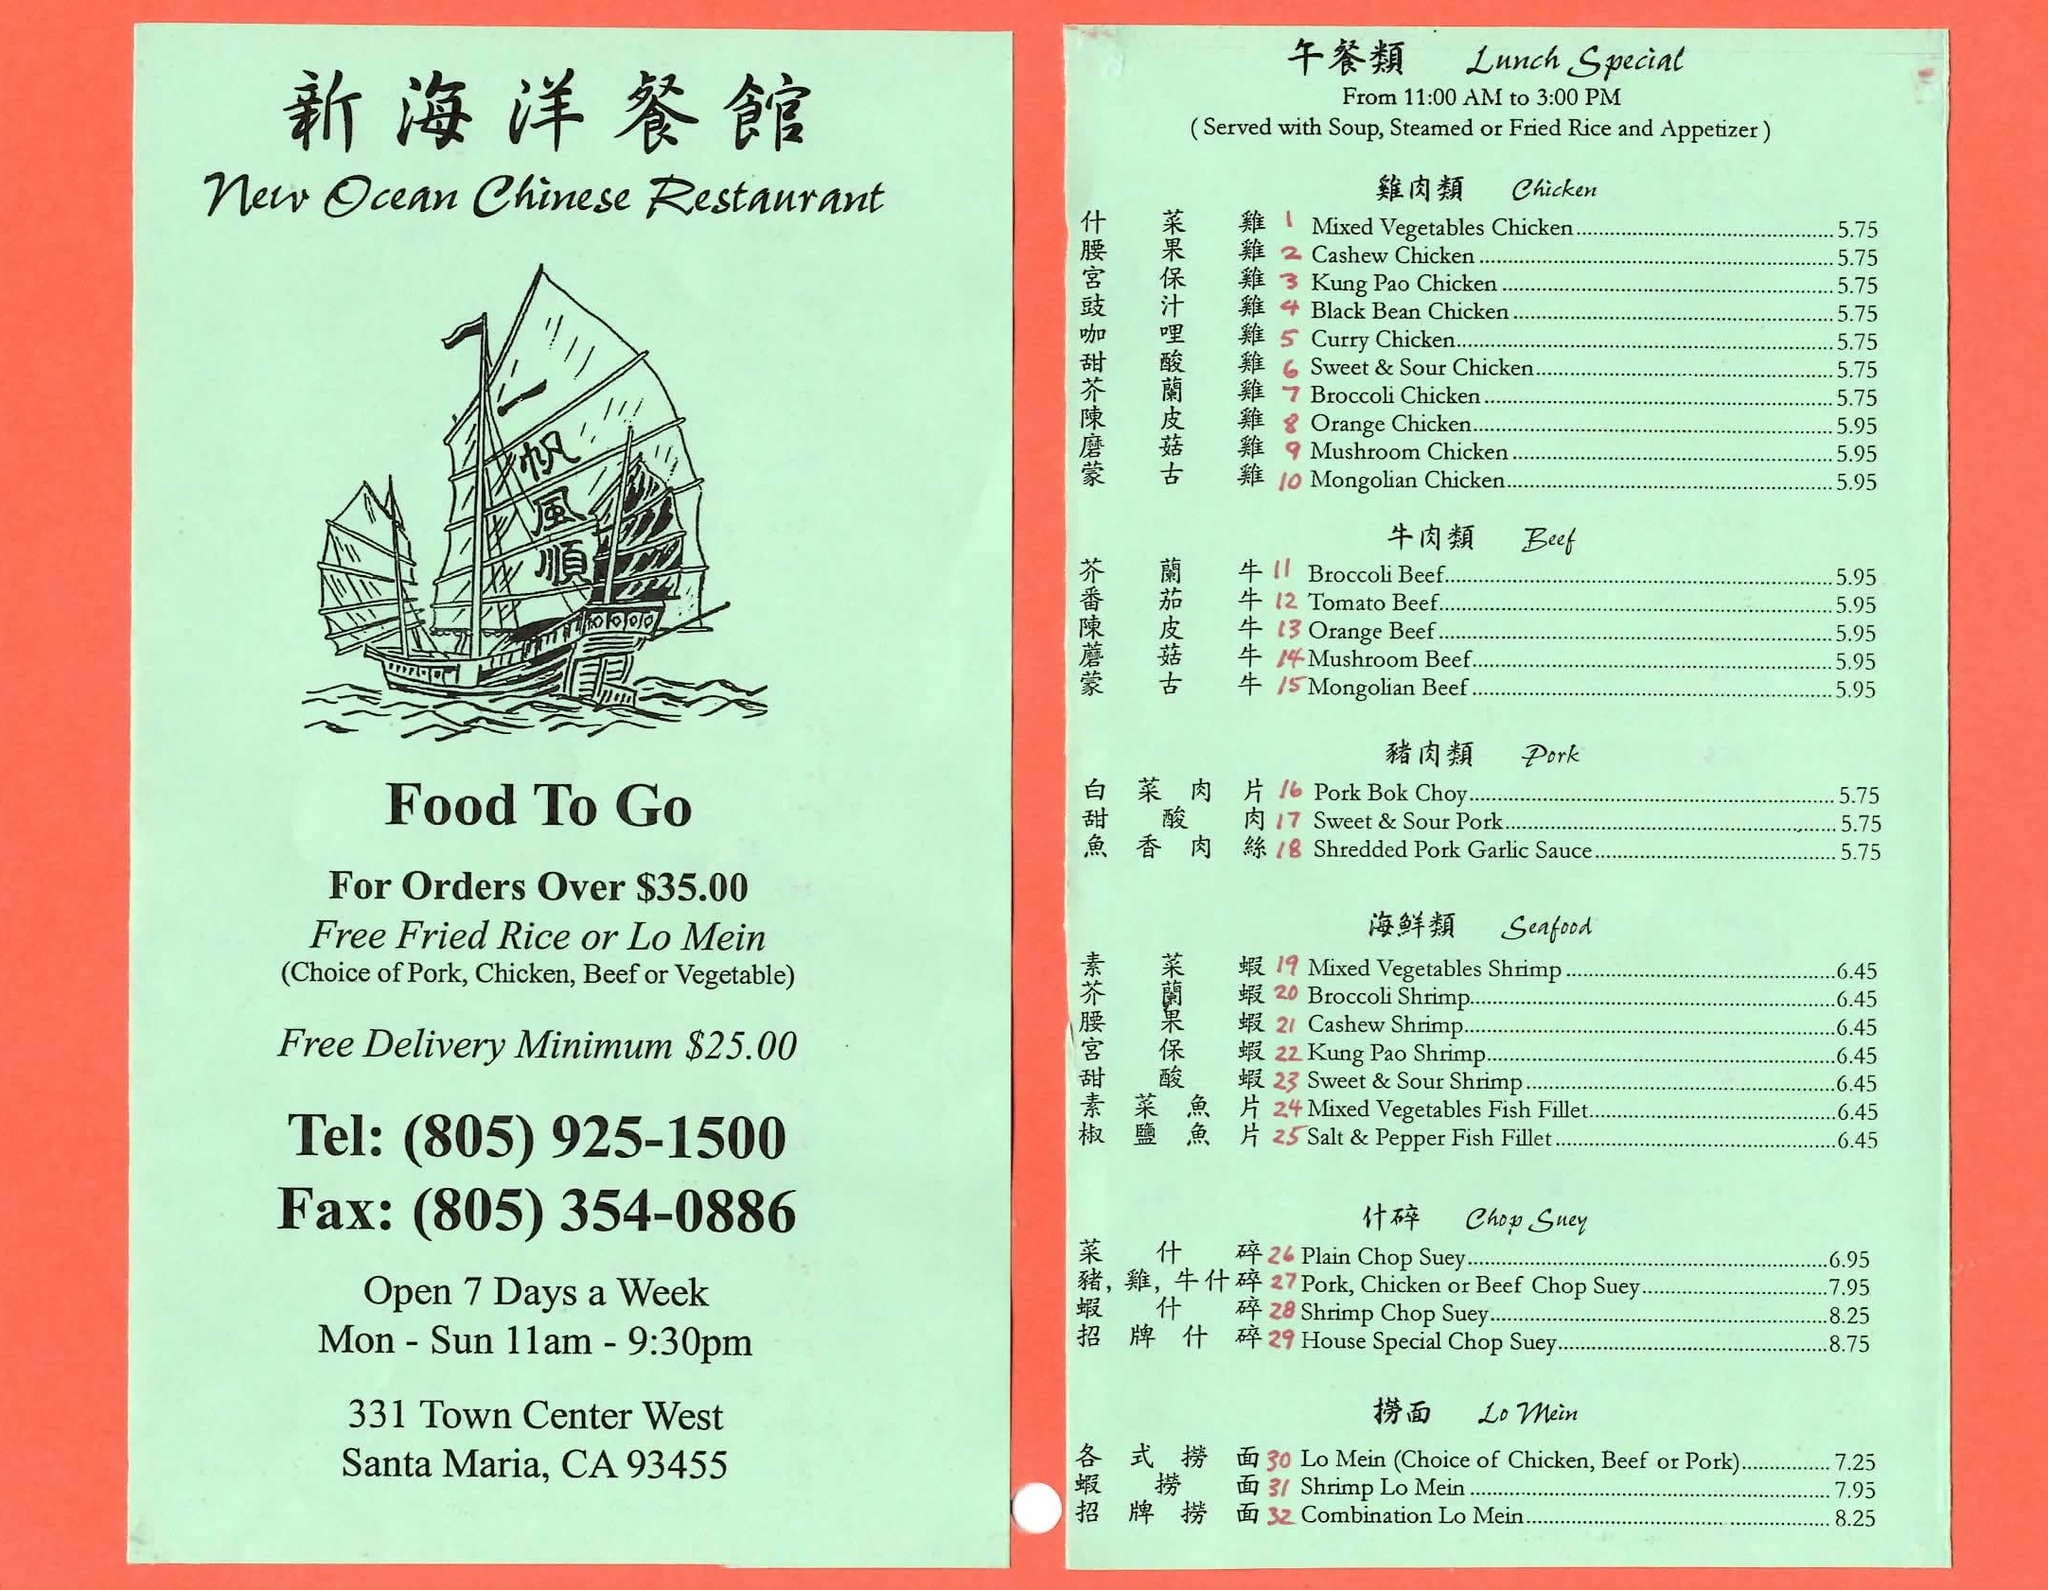 New Ocean Chinese Restaurant Menu Urbanspoon/Zomato